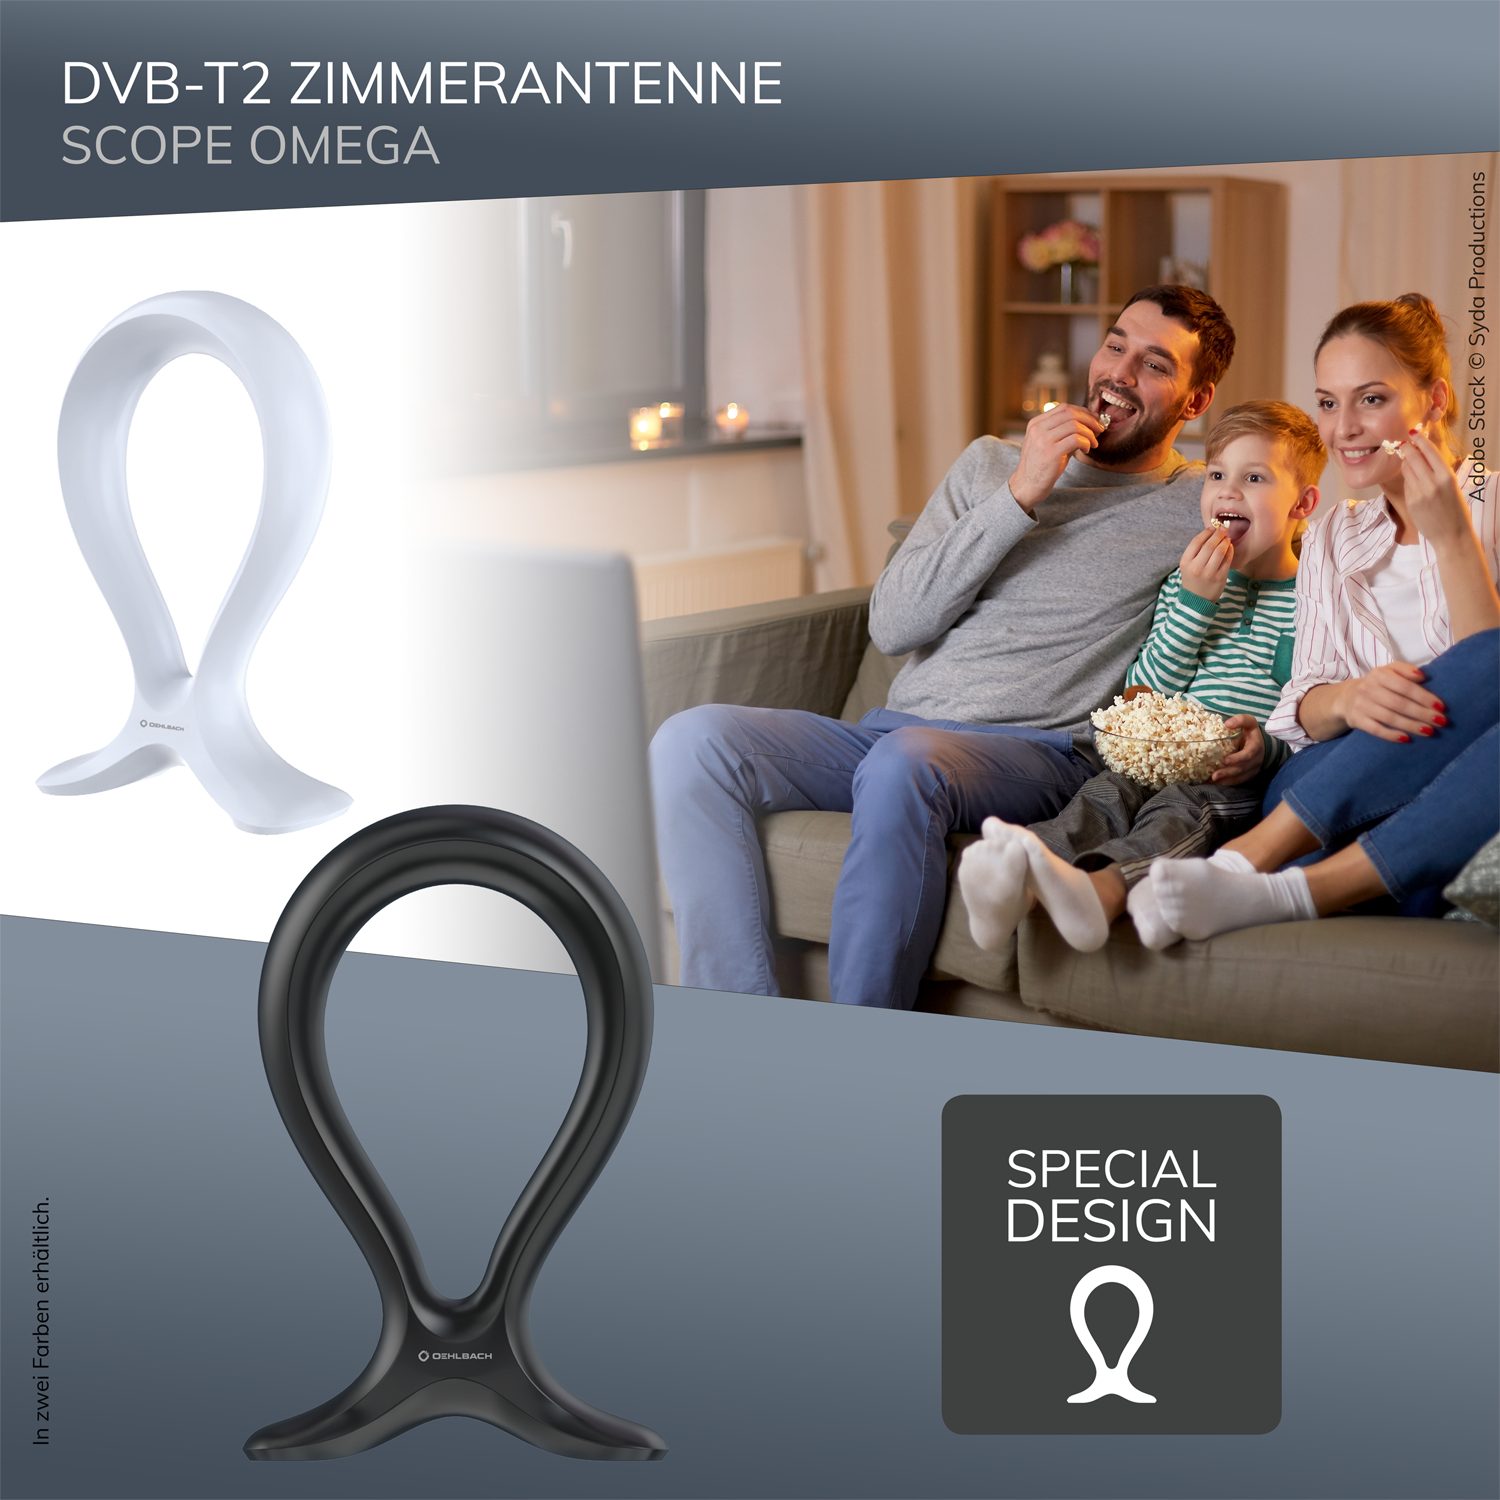 Oehlbach Scope Omega Zimmerantenne Innenantenne Weiß DVB-T2 (DVB-T2) für